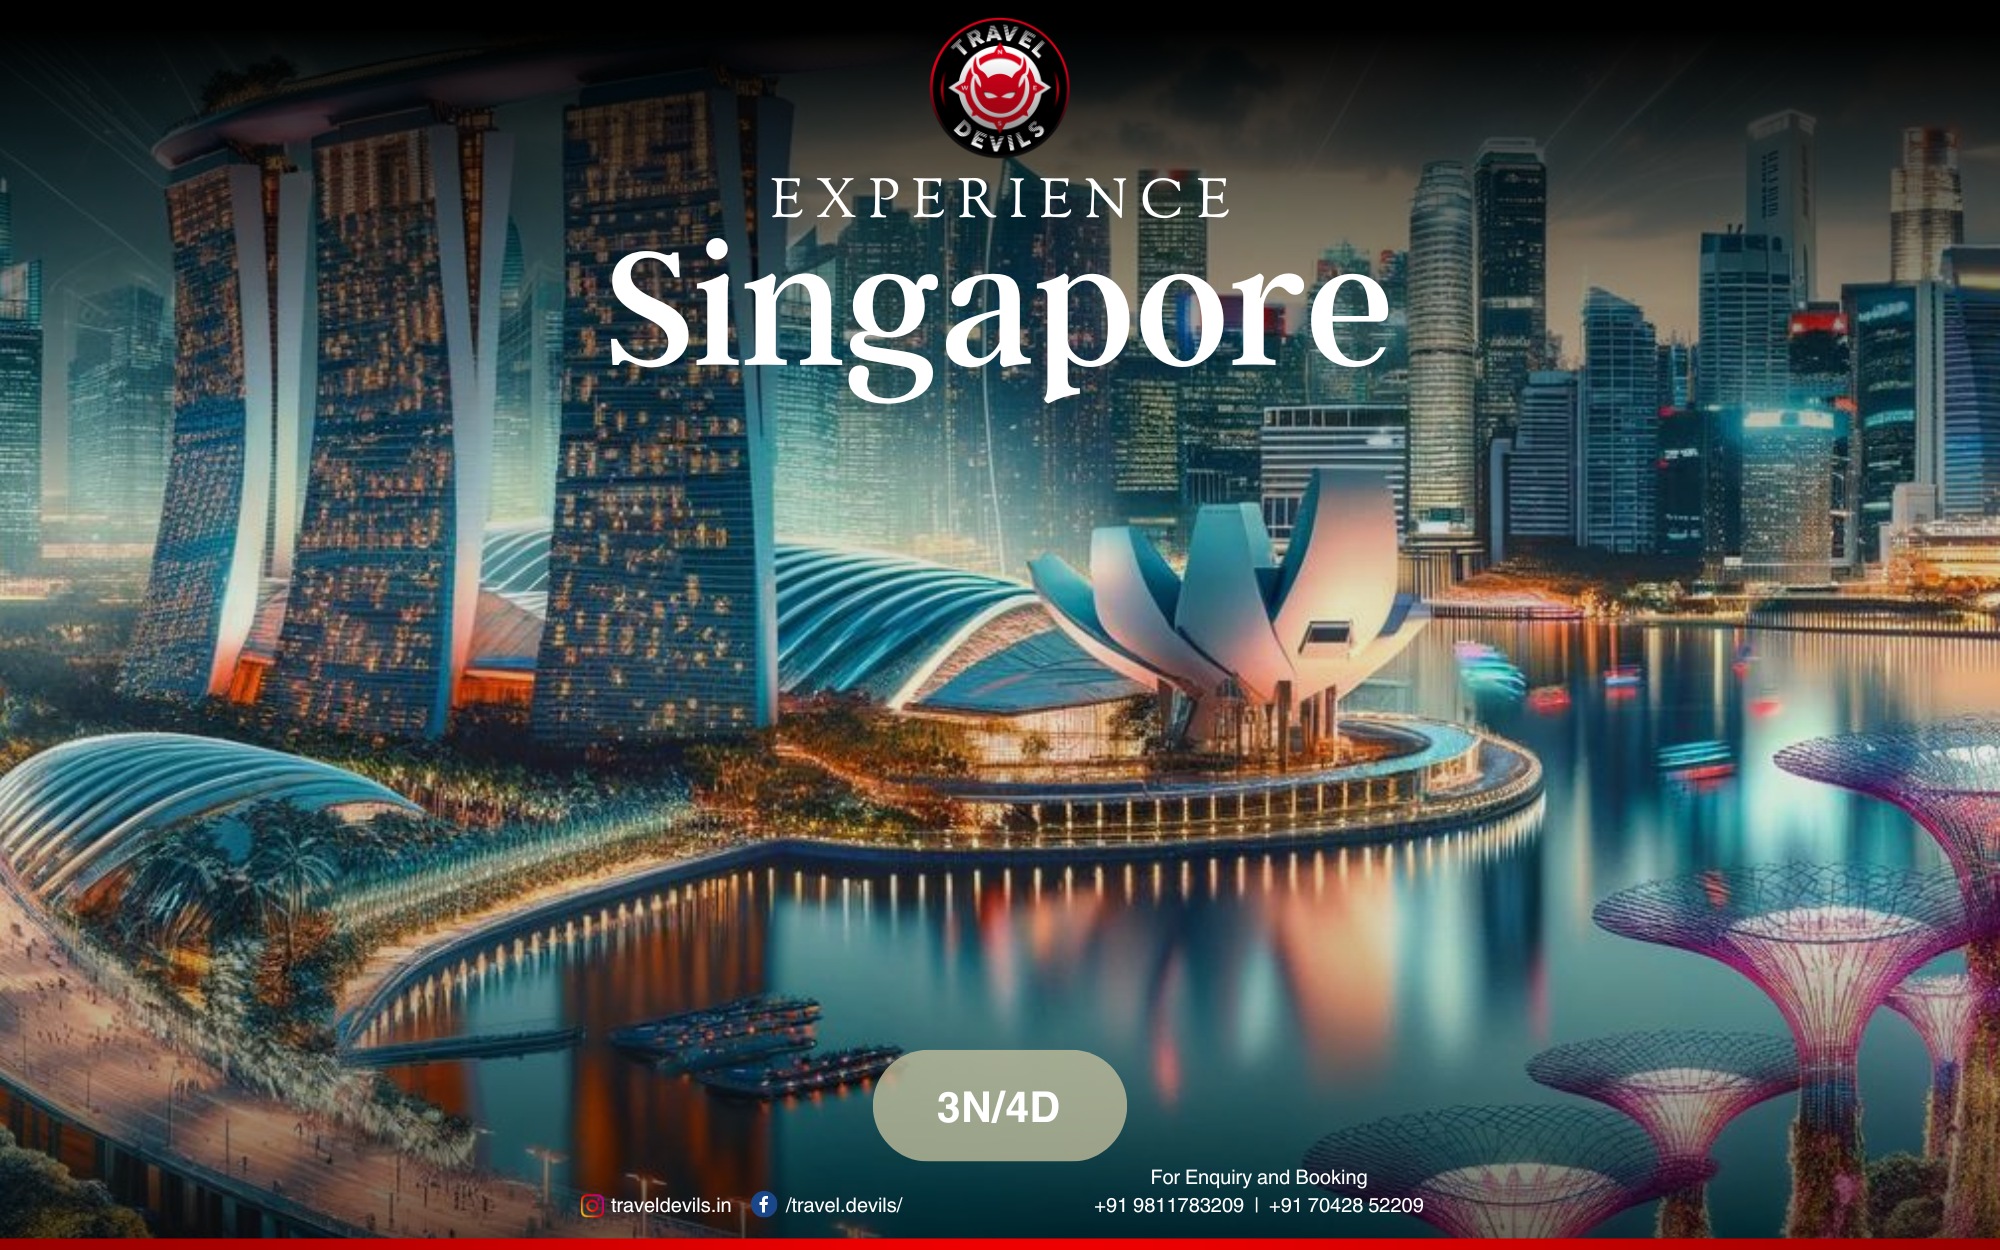 SINGAPORE - 3N4D